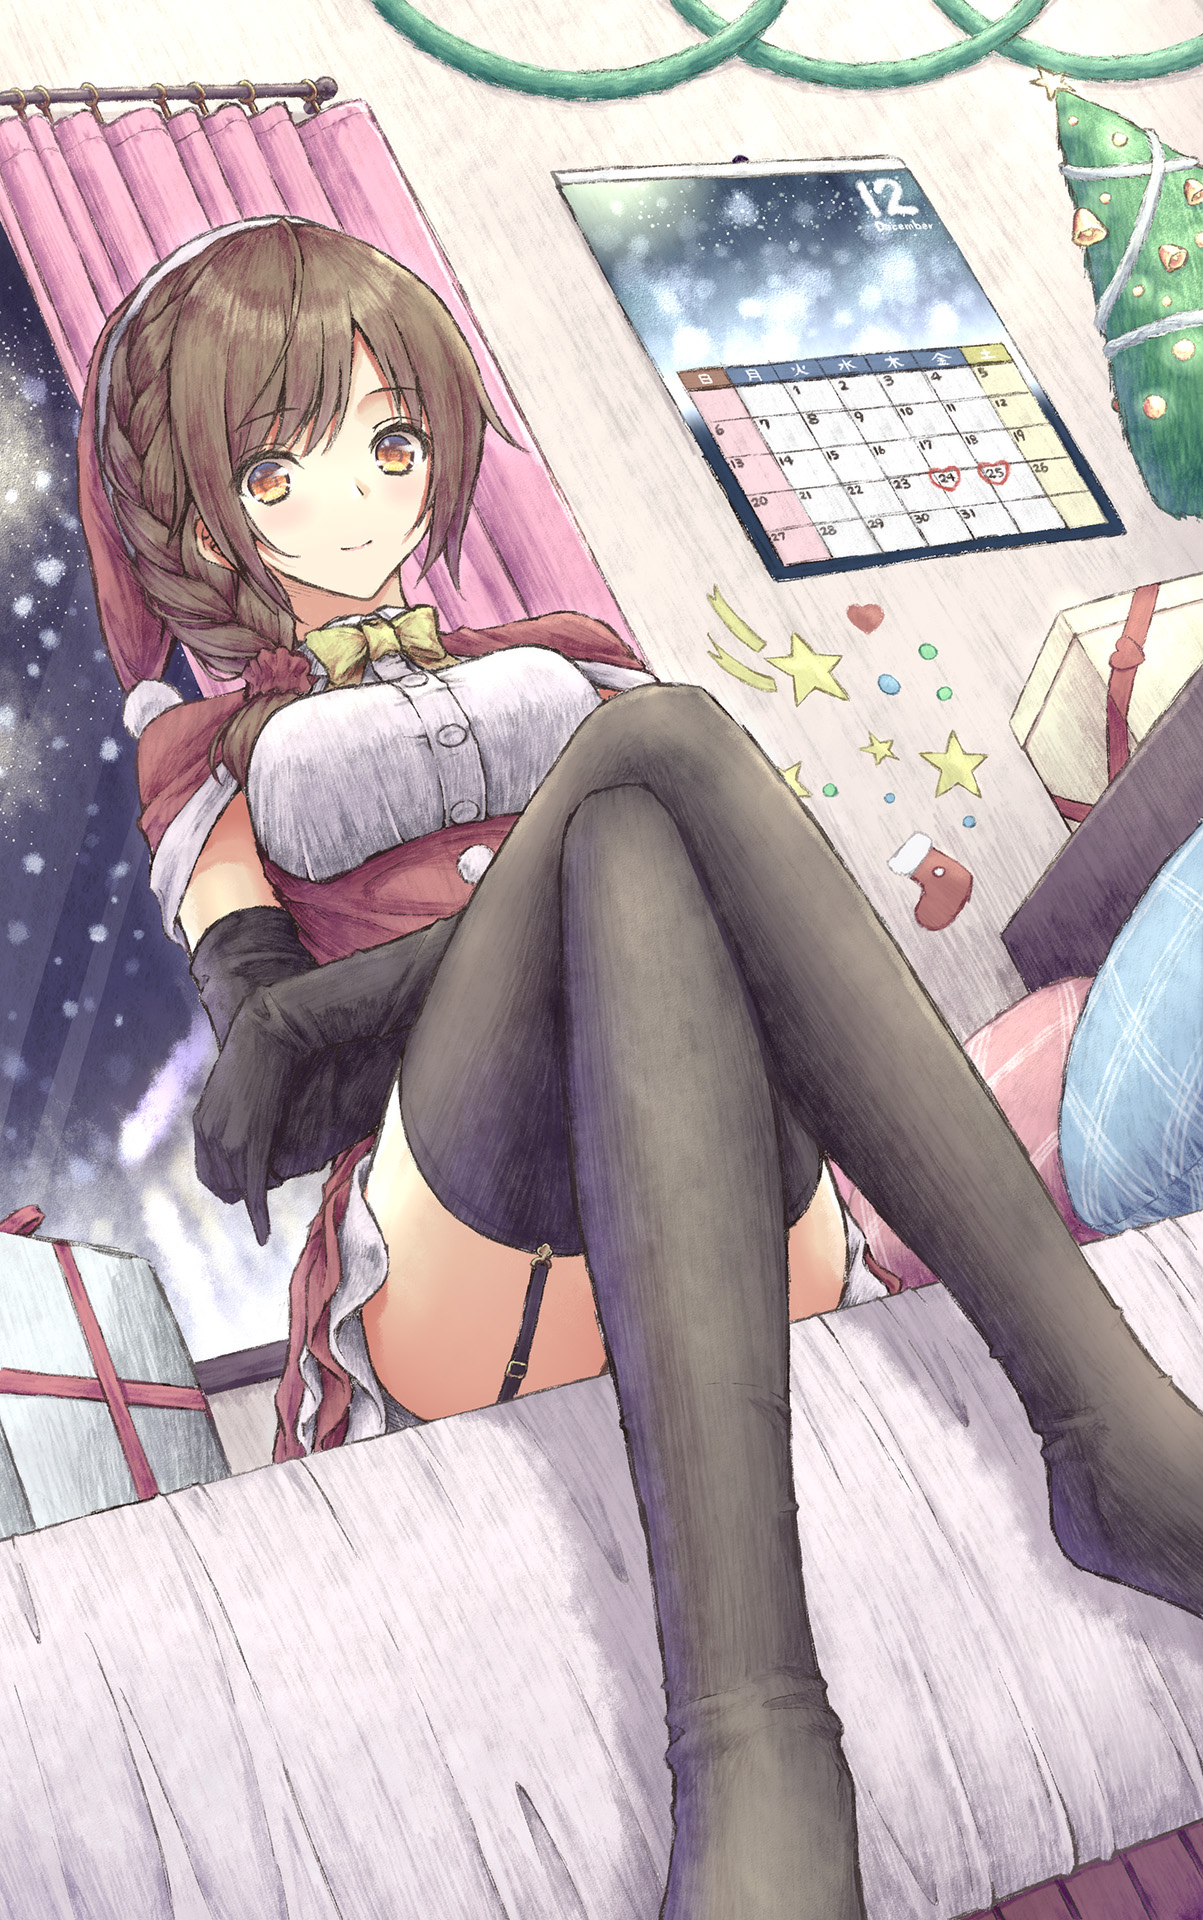 Anime 1203x1920 anime anime girls digital art artwork 2D portrait display black stockings garter straps smiling brown eyes brunette braids low-angle Christmas Santa girl Senkawa Chihiro THE iDOLM@STER Aramachi